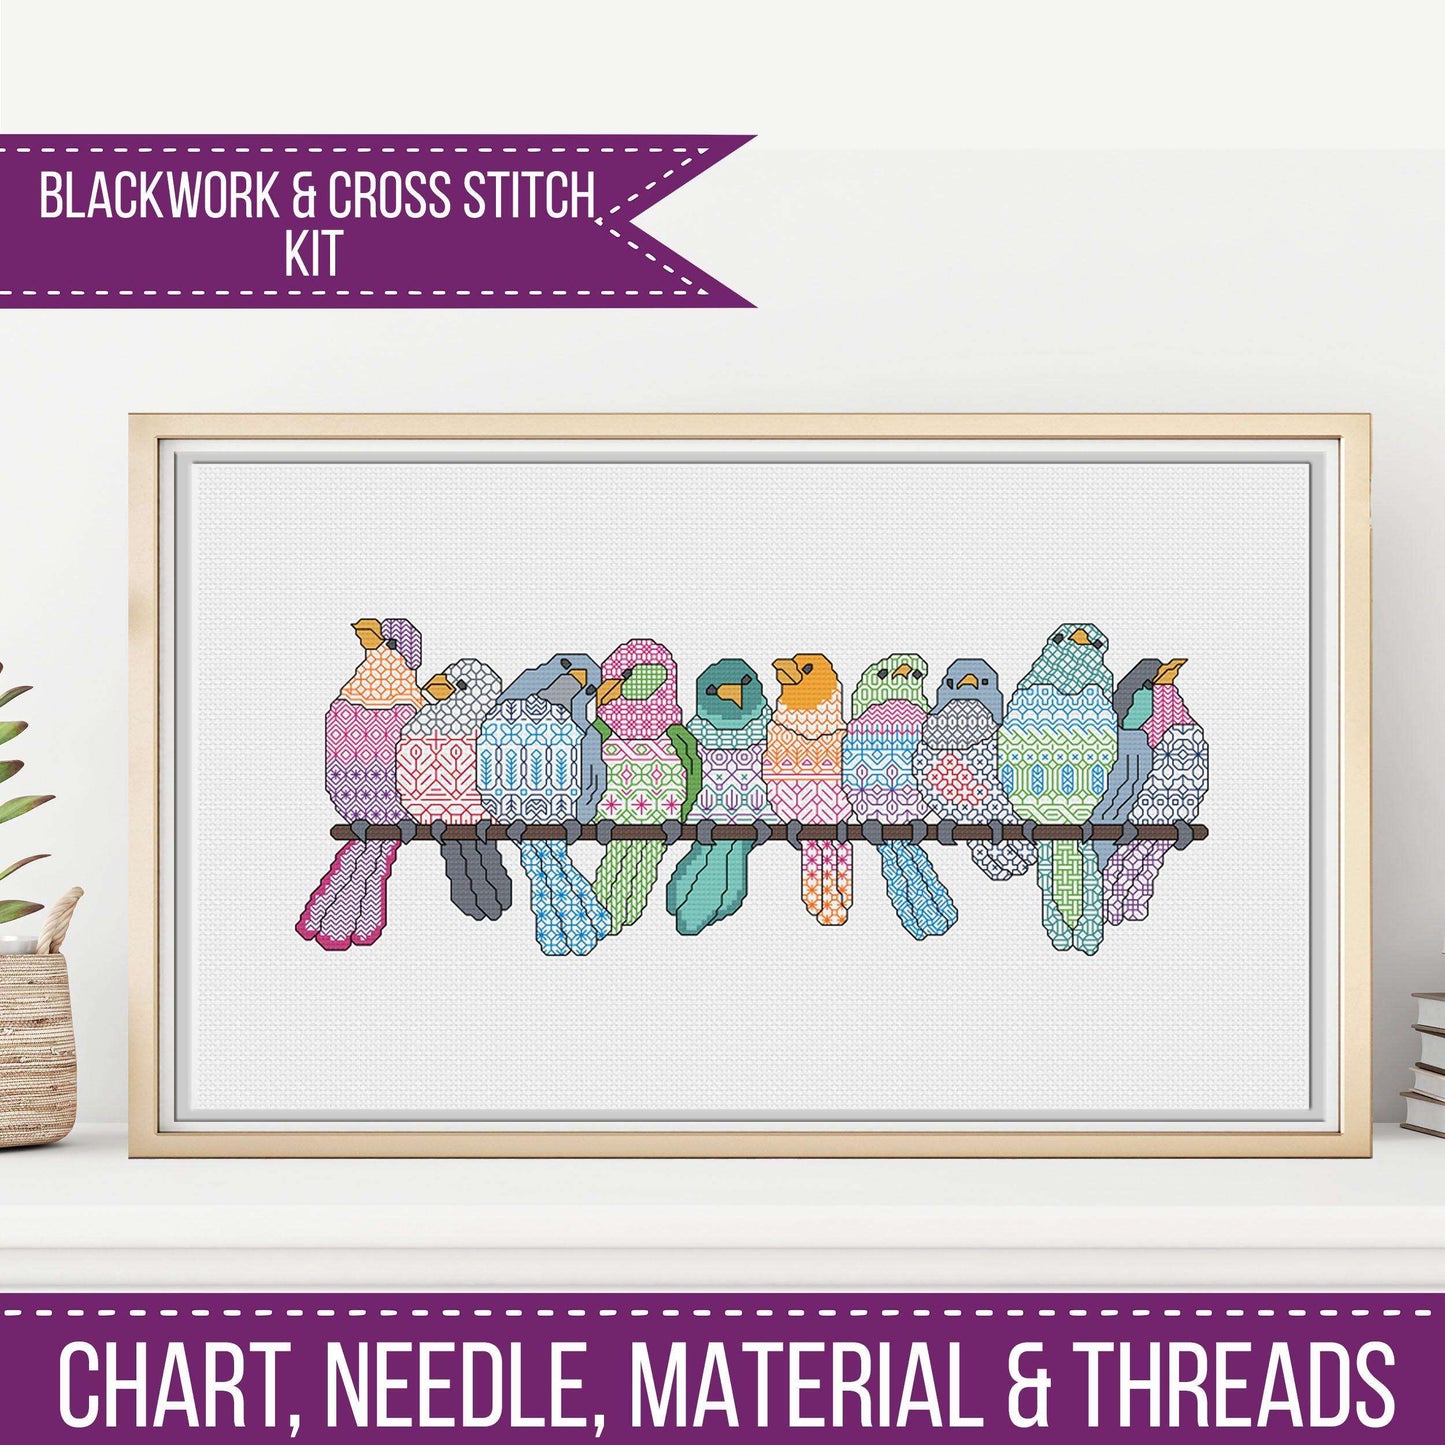 Just Birds Blackwork Kit - Blackwork Patterns & Cross Stitch by Peppermint Purple